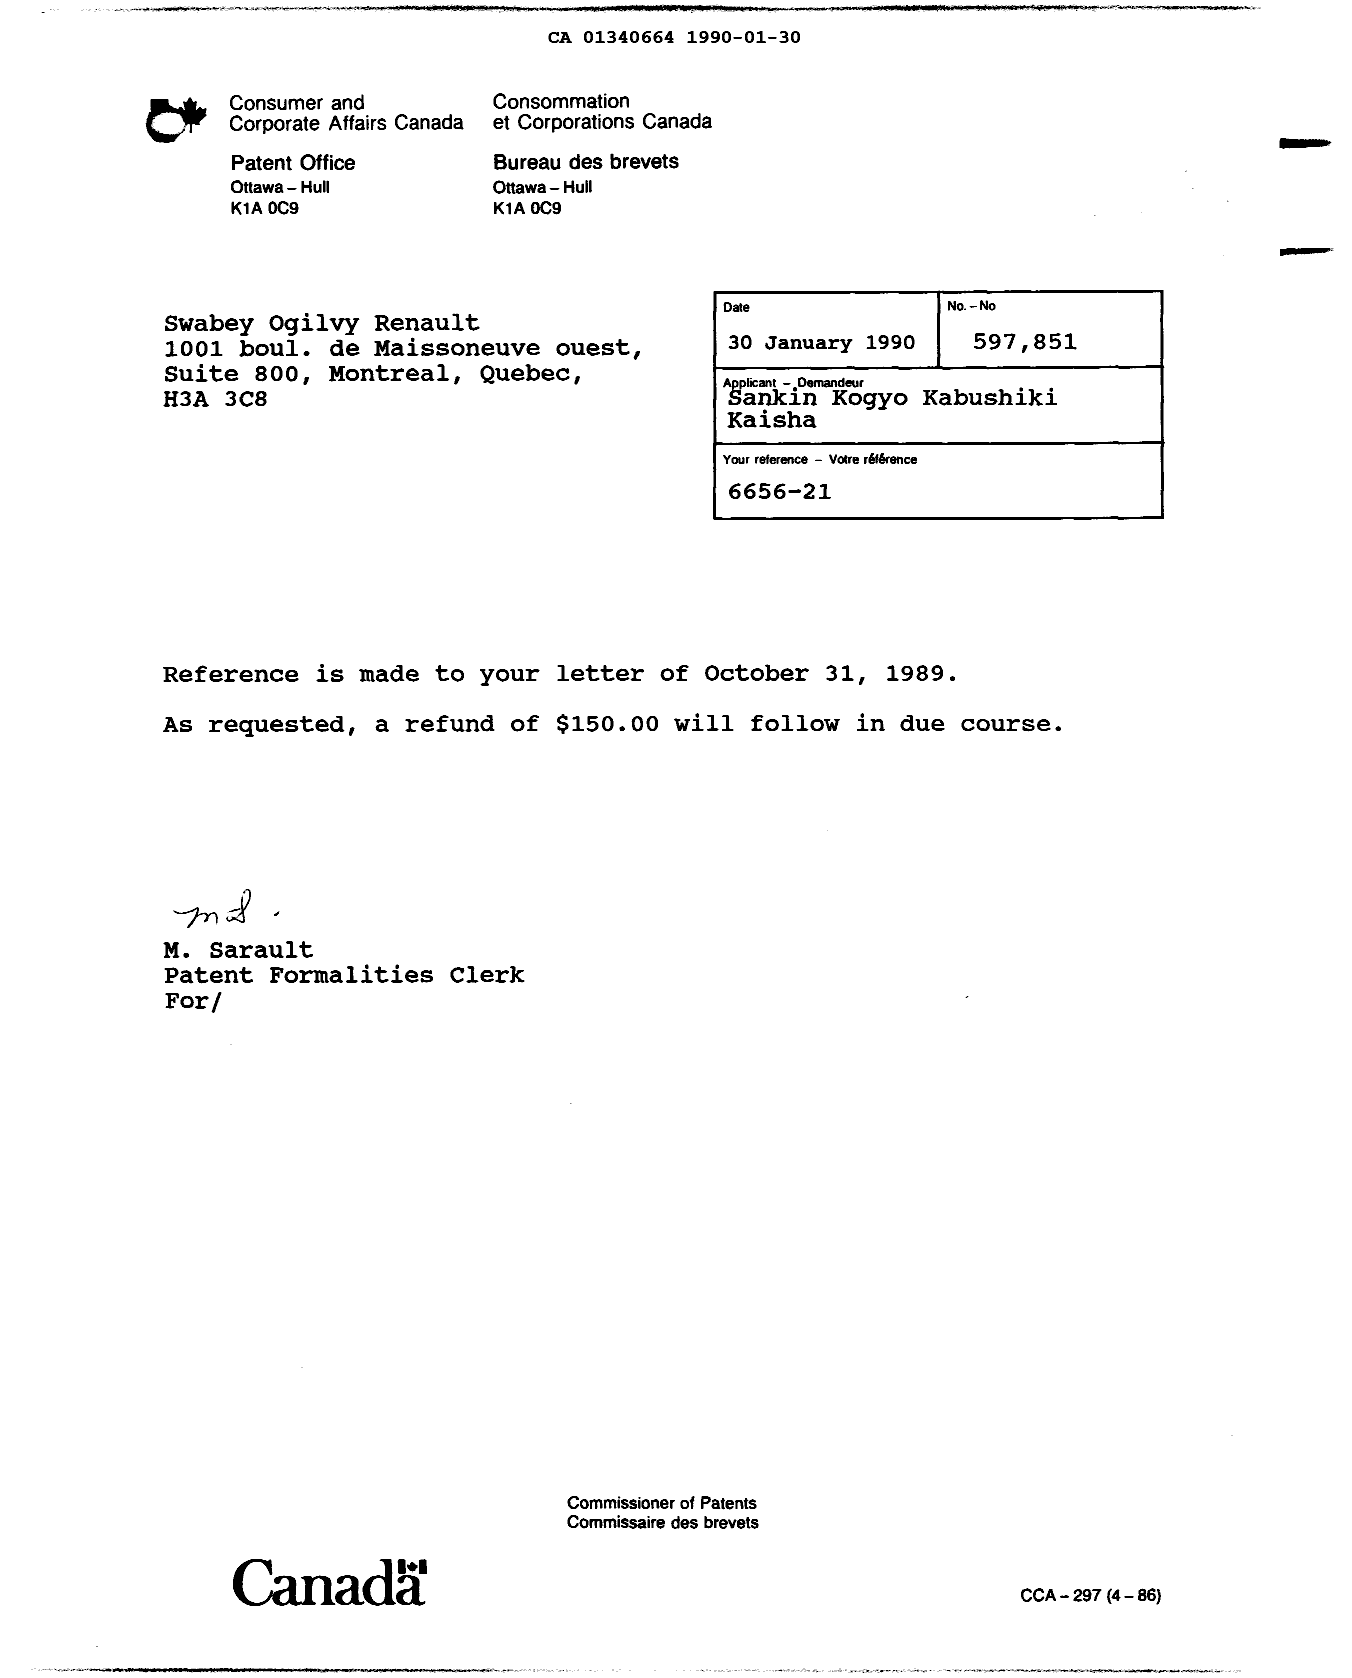 Canadian Patent Document 1340664. Correspondence 19900130. Image 1 of 1